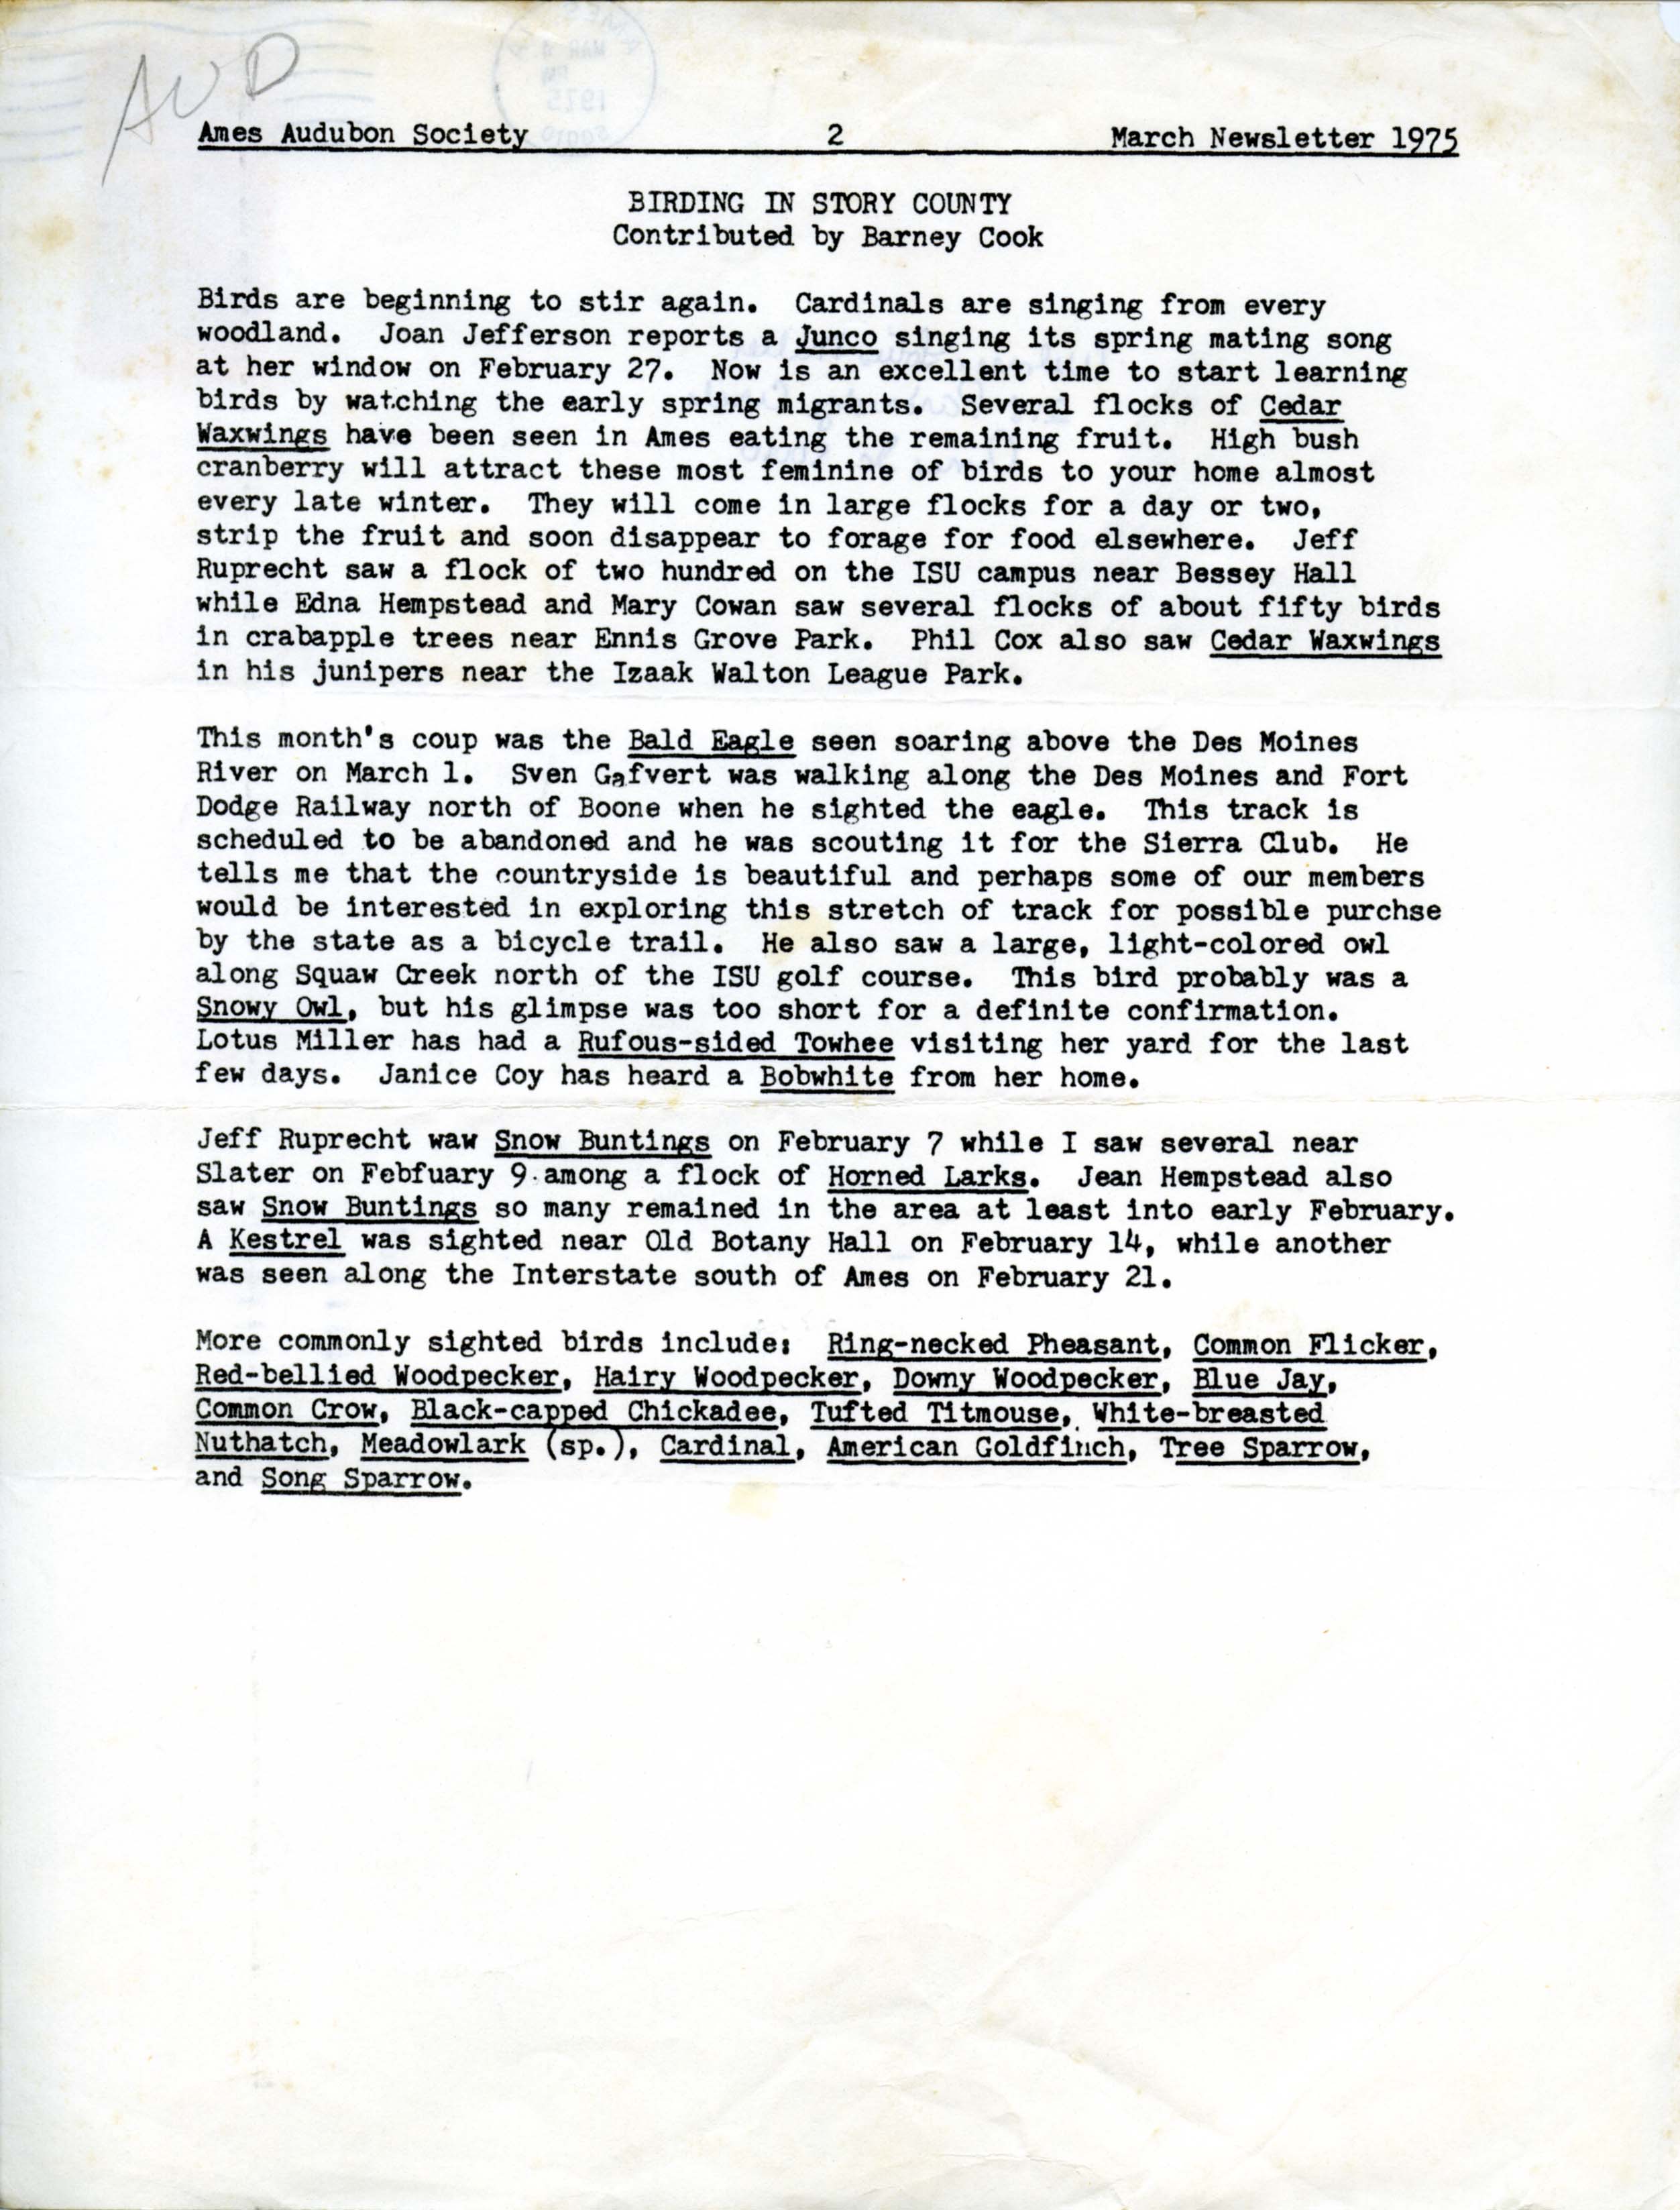 Ames Audubon Society March Newsletter, 1975